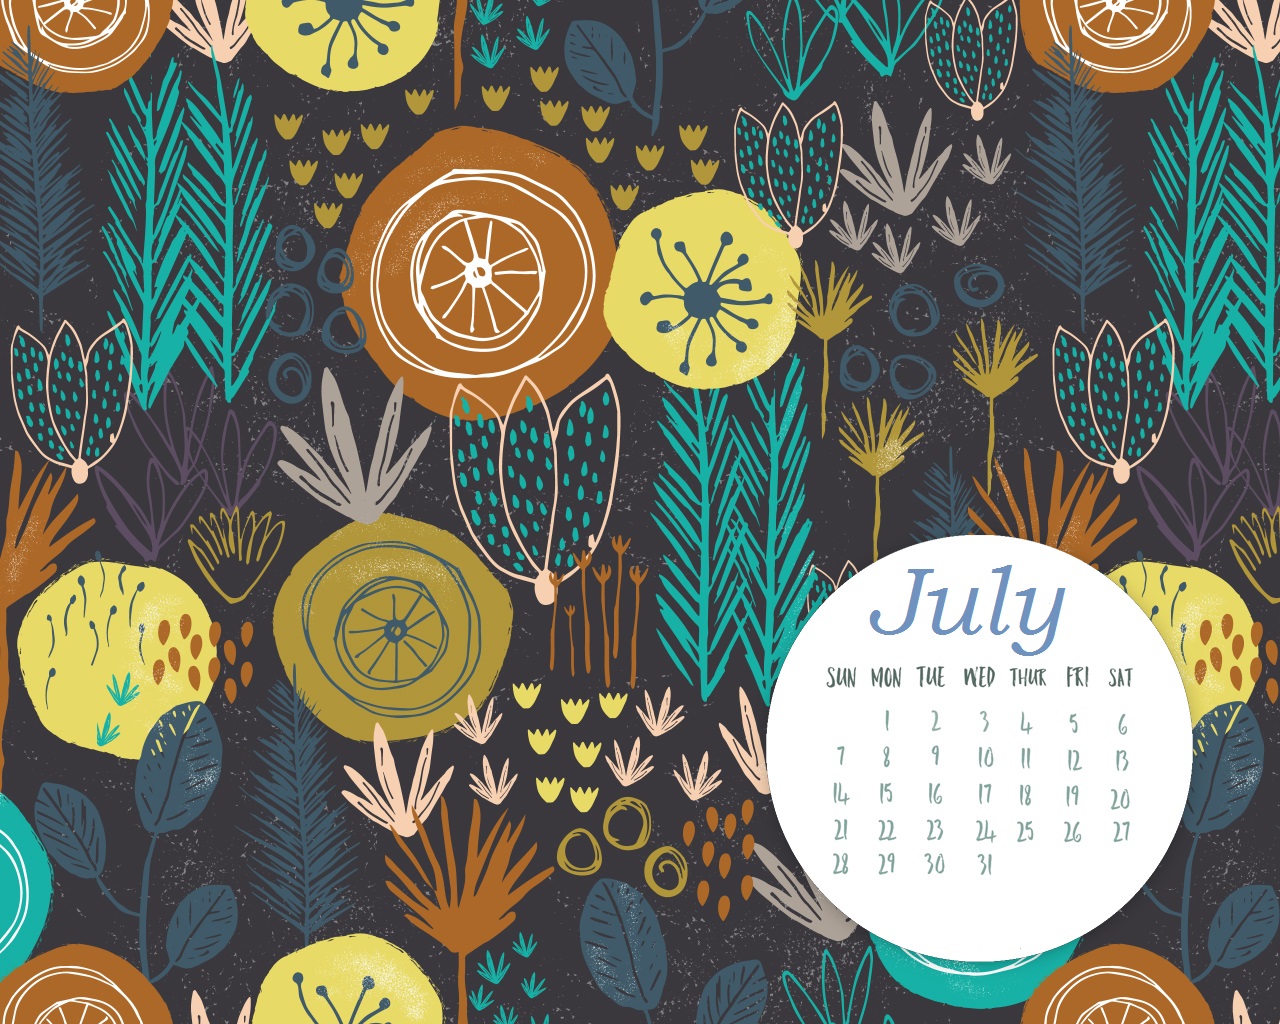 Free July 2019 Hd Calendar Wallpaper - July 2019 Desktop Calendar - HD Wallpaper 